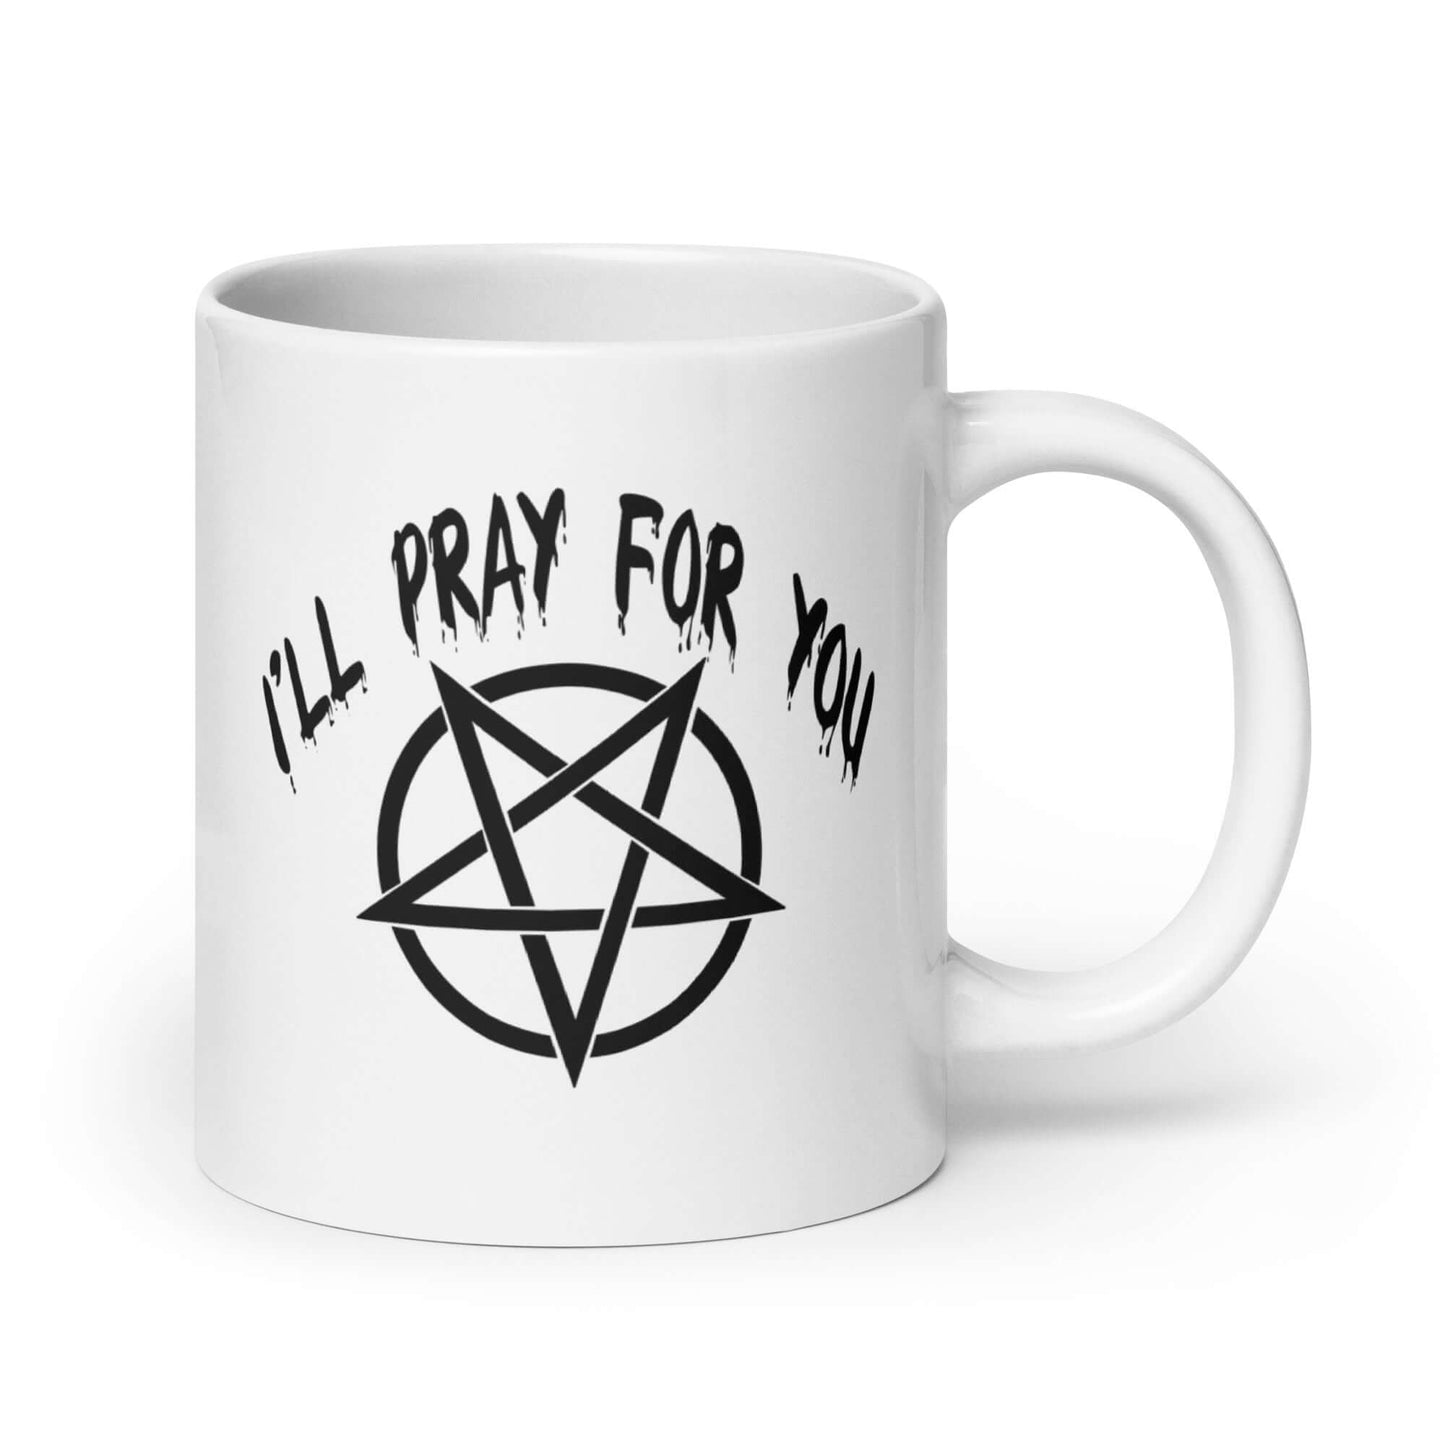 I'll pray for you coffee mug